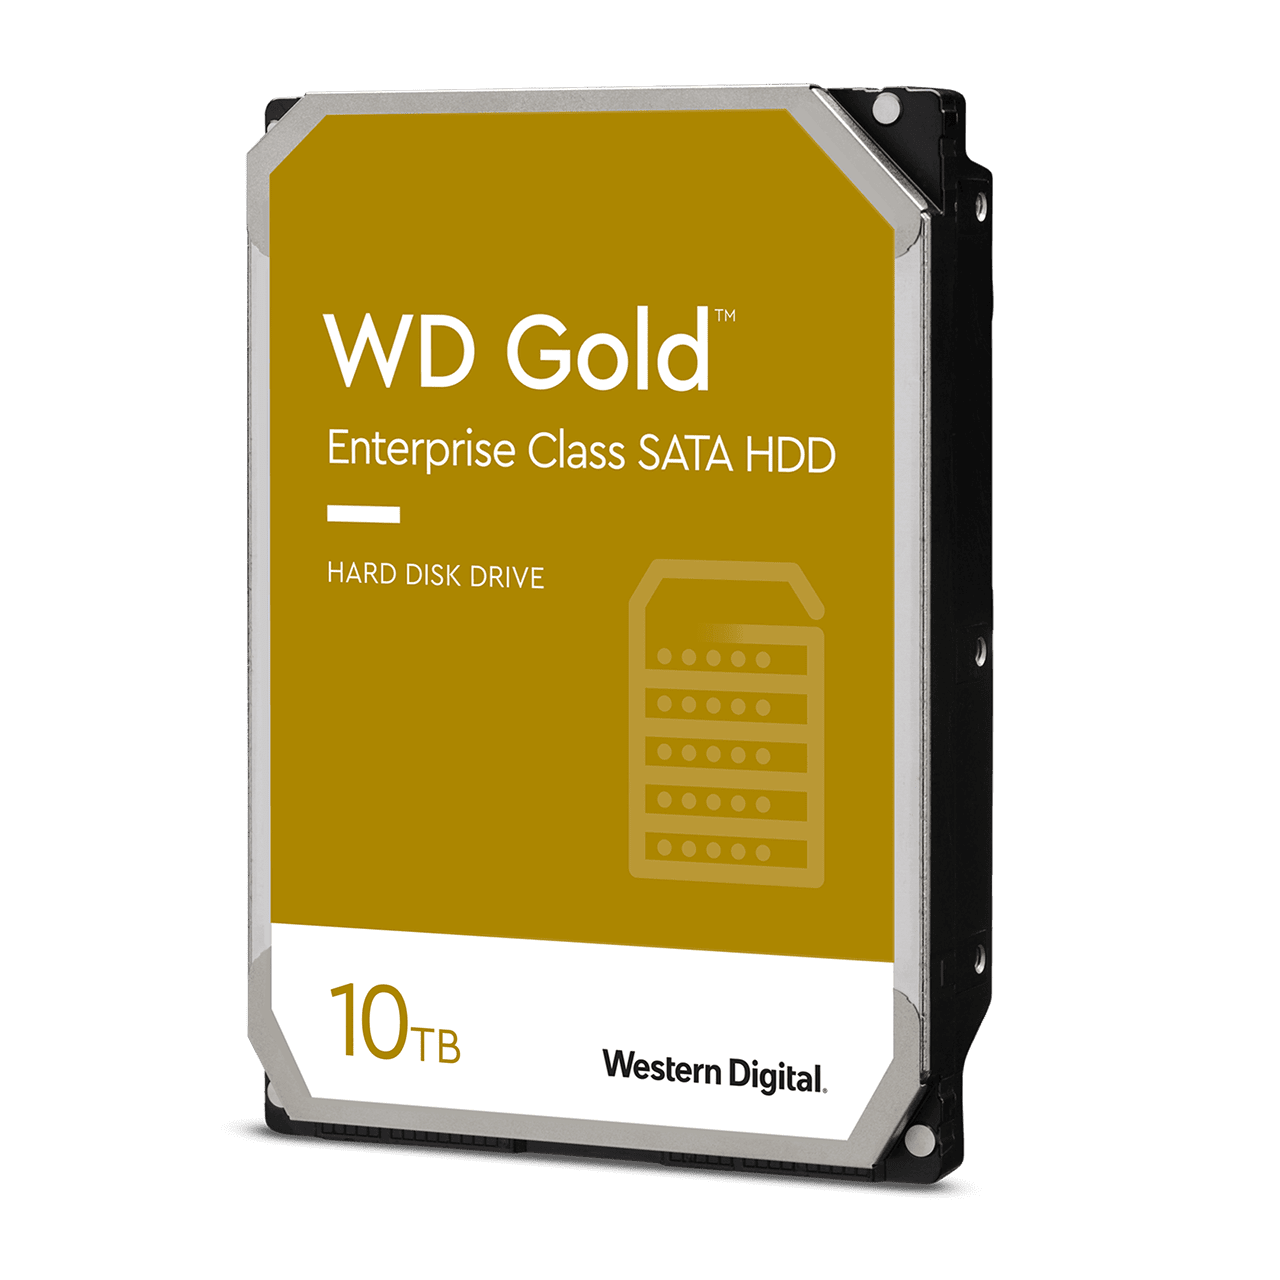 WD Gold™ Enterprise Class SATA HDD - 10TB - Image6